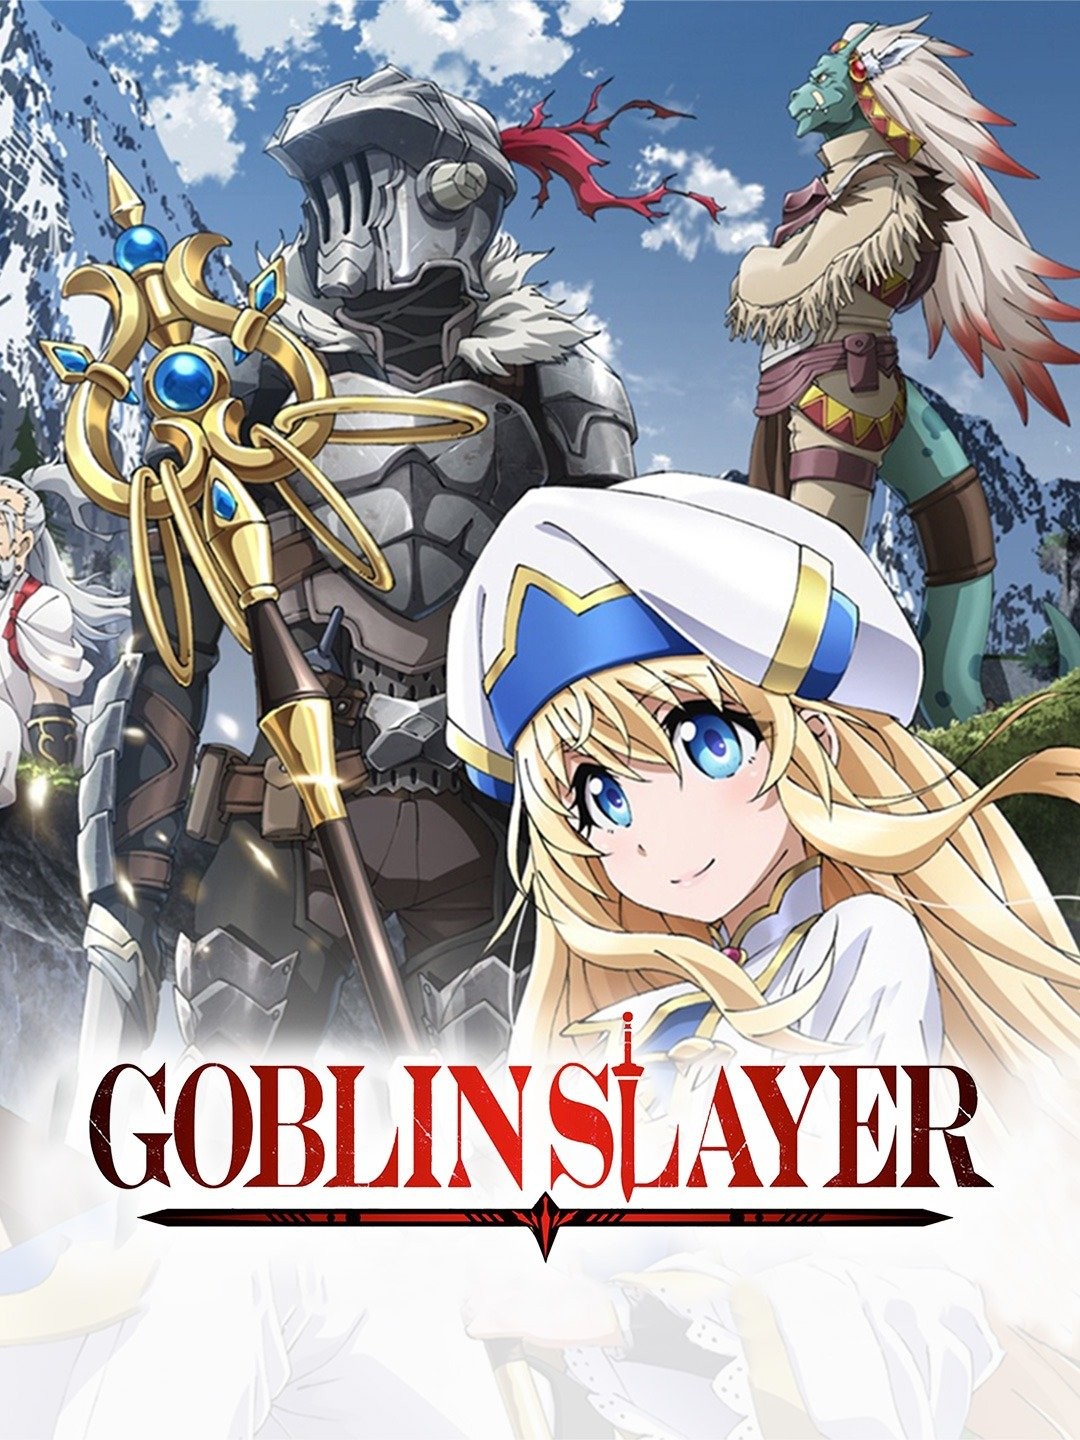 Goblin Slayer Season 2 - watch episodes streaming online